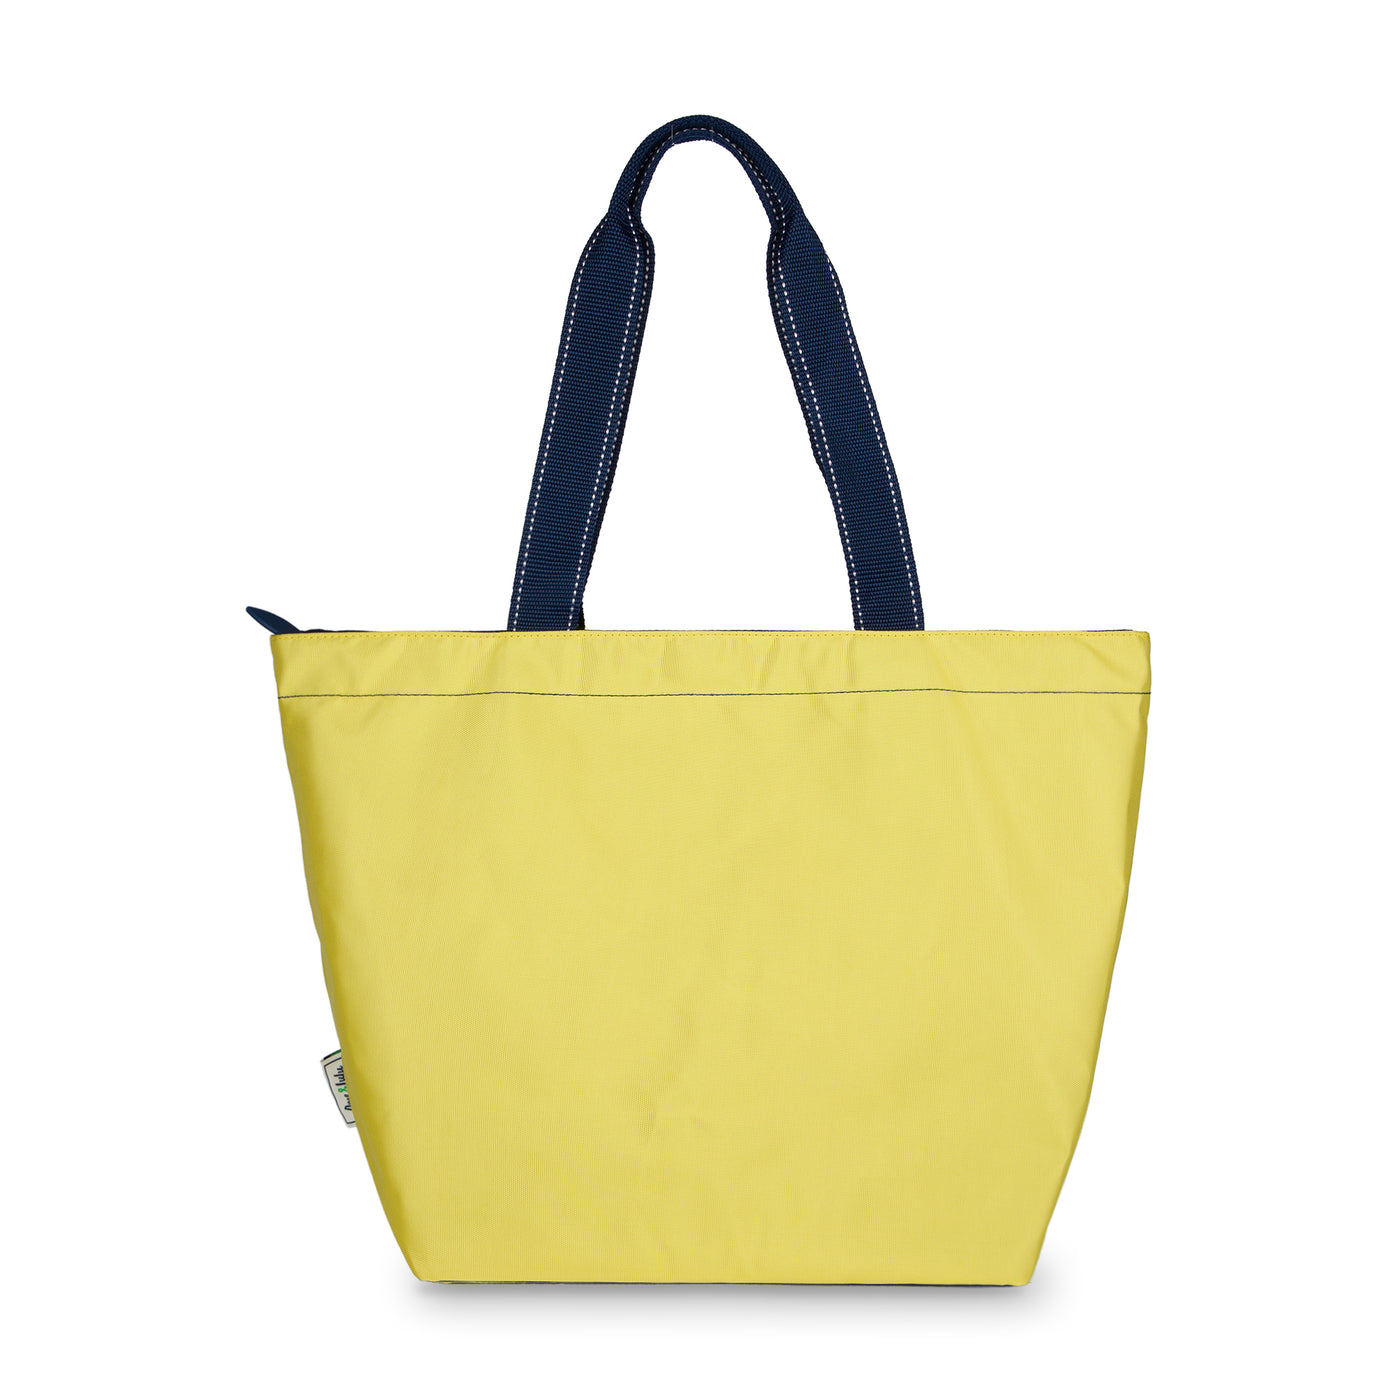 yellow nylon tote bag with navy straps